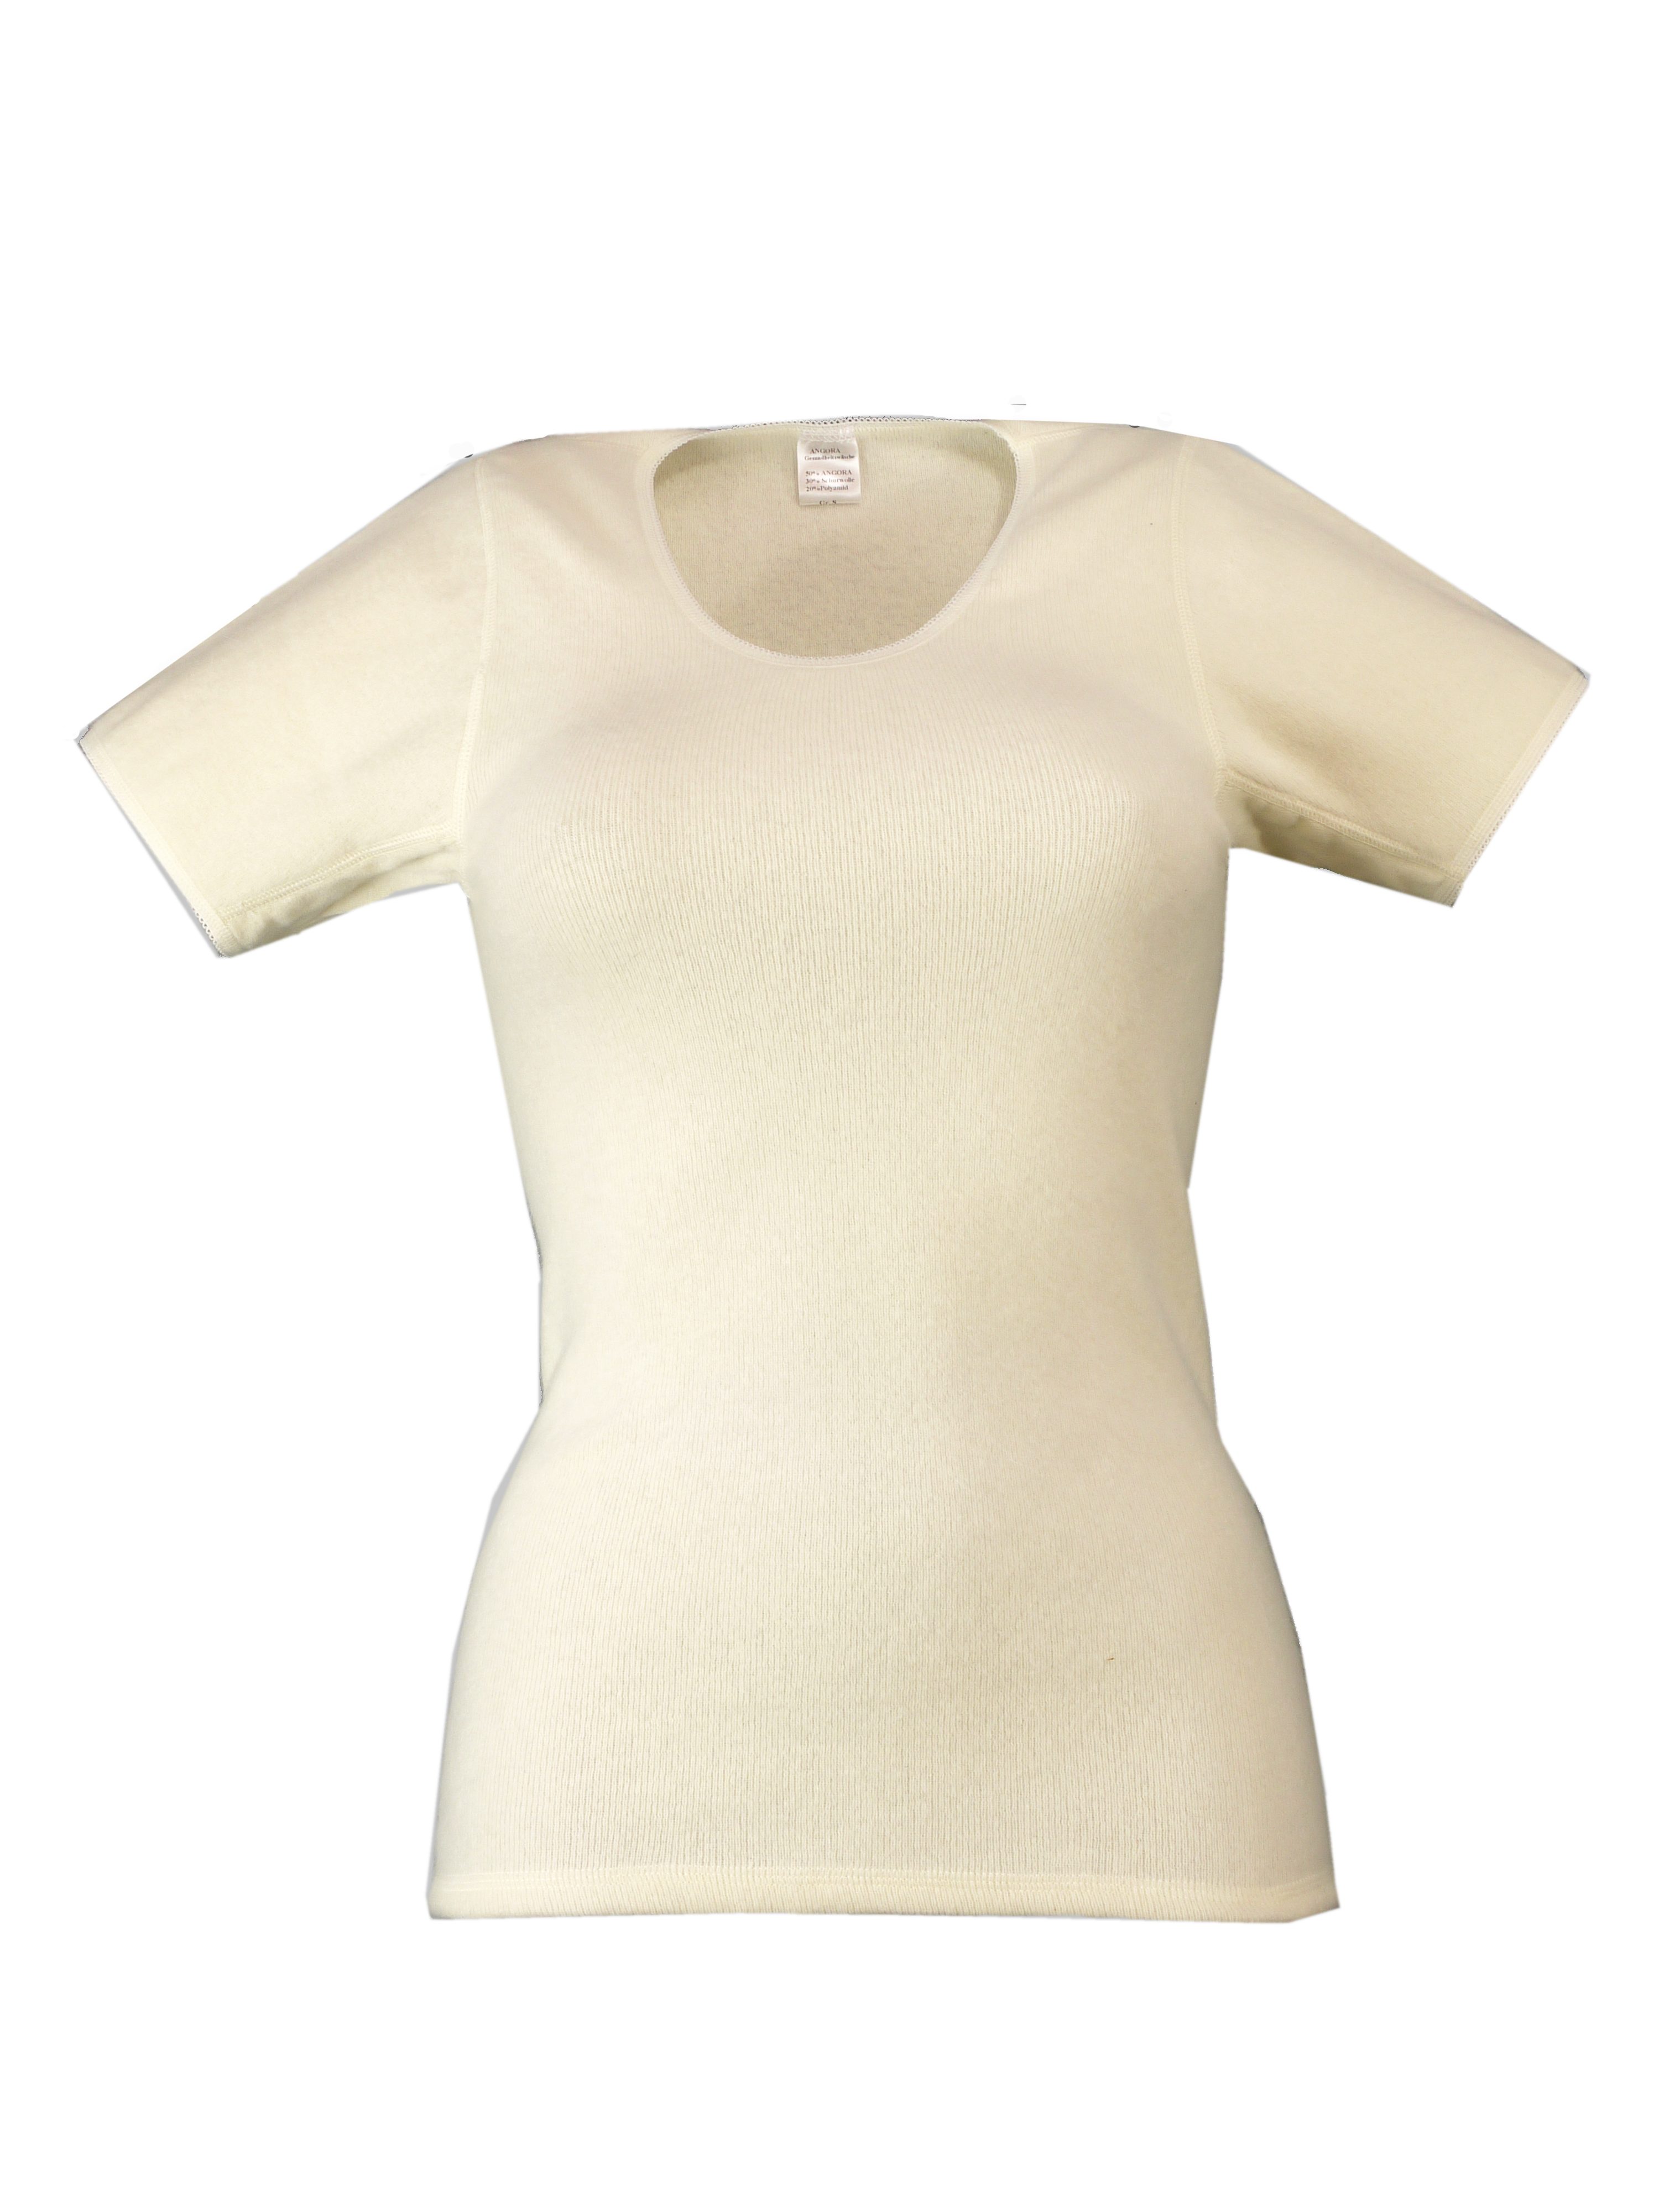 Kaschmir&Schurwolle wobera Arm/T-Shirt Unterhemd naturweiß 1/2 Damenunterhemd mit NATUR NATUR wobera